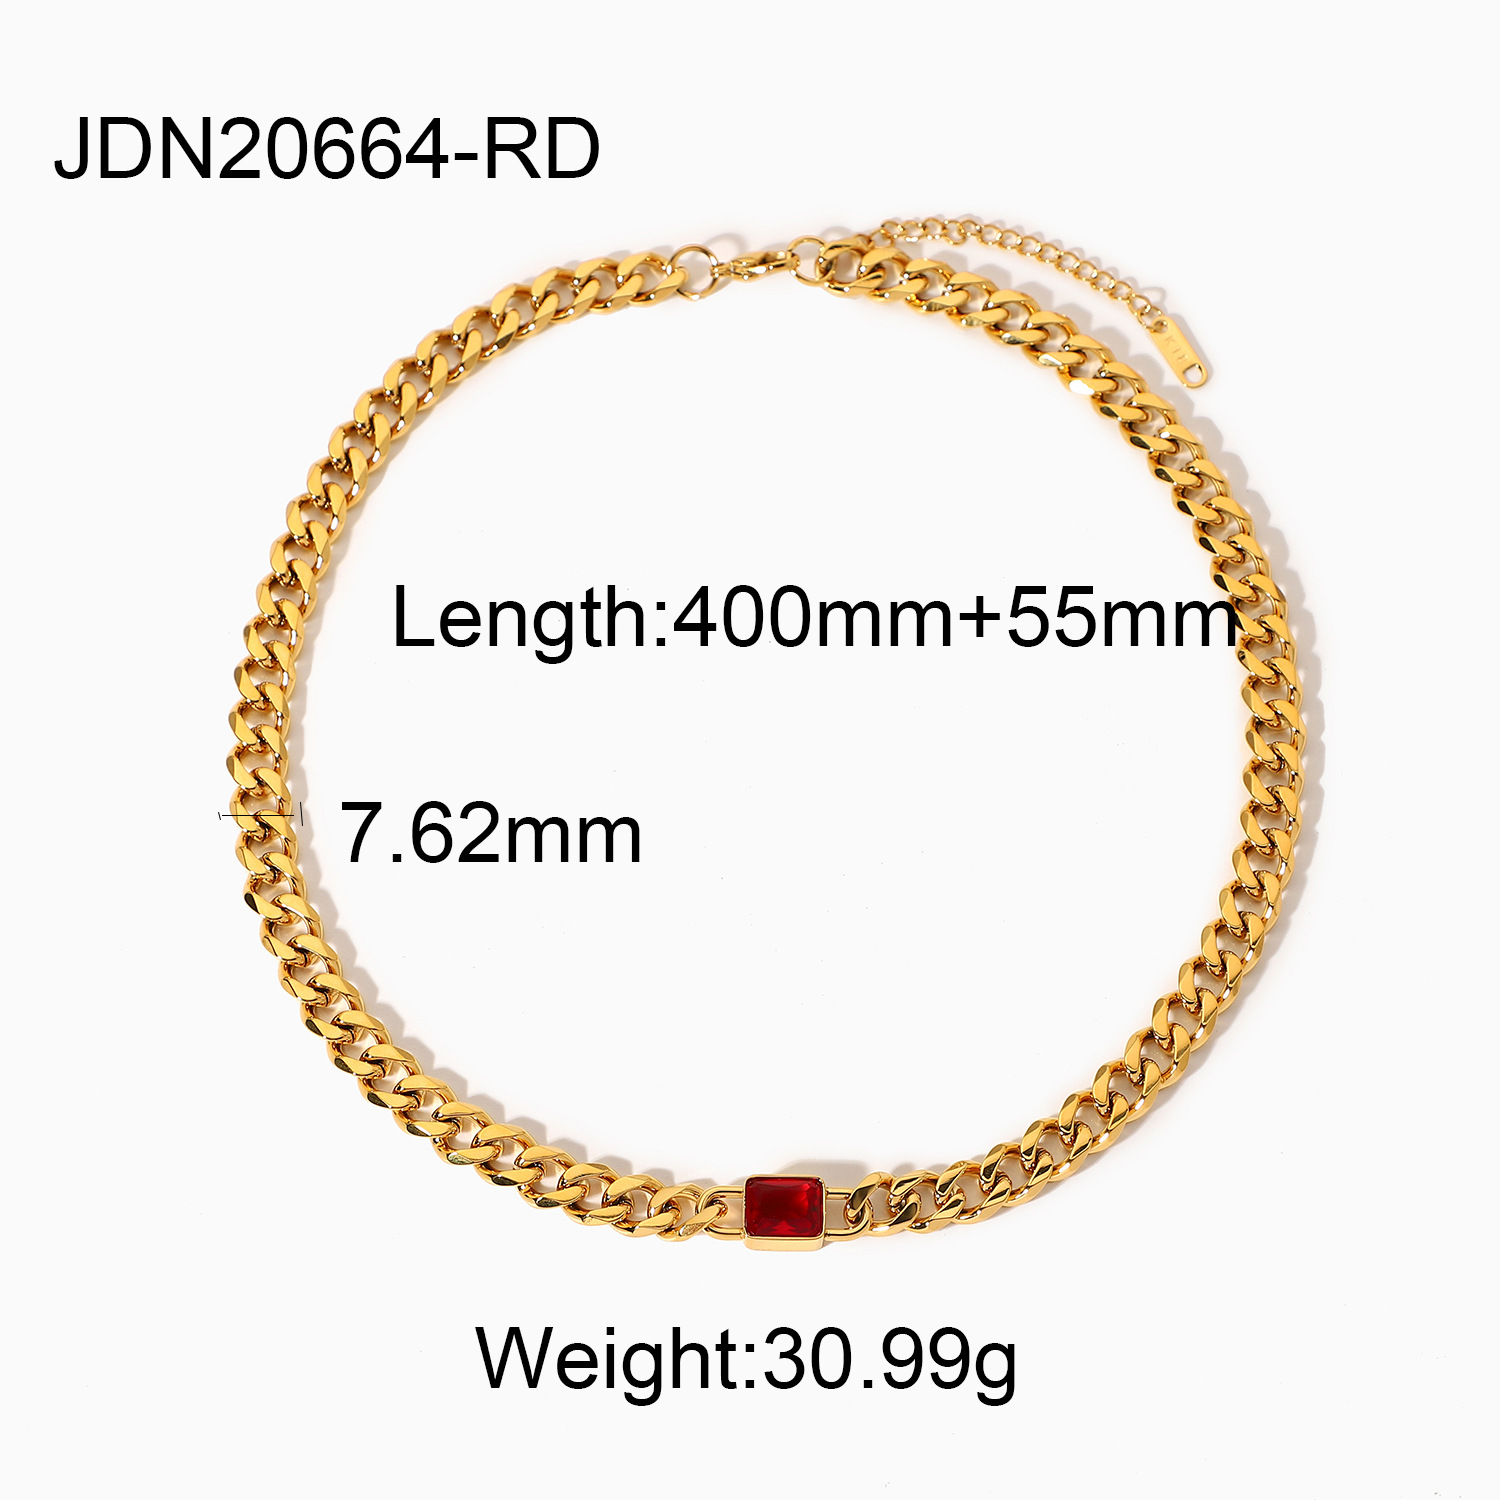 2:JDN20664-RD